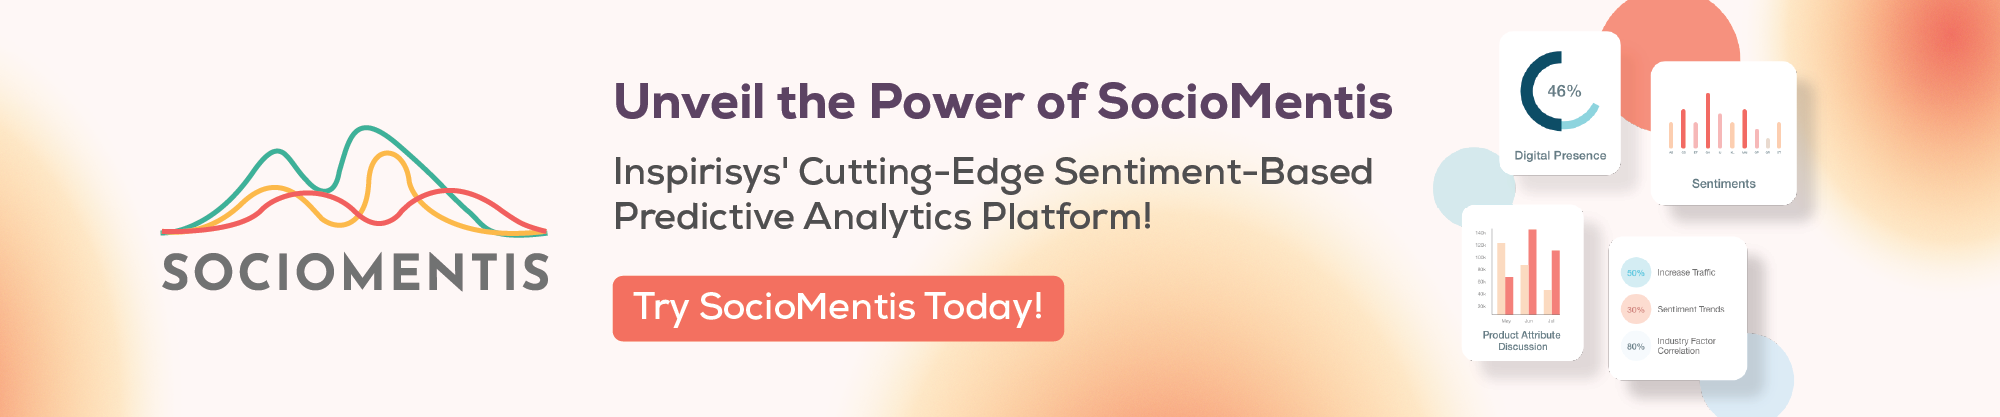 sociomentis - a sentiment based predictive analytics platform